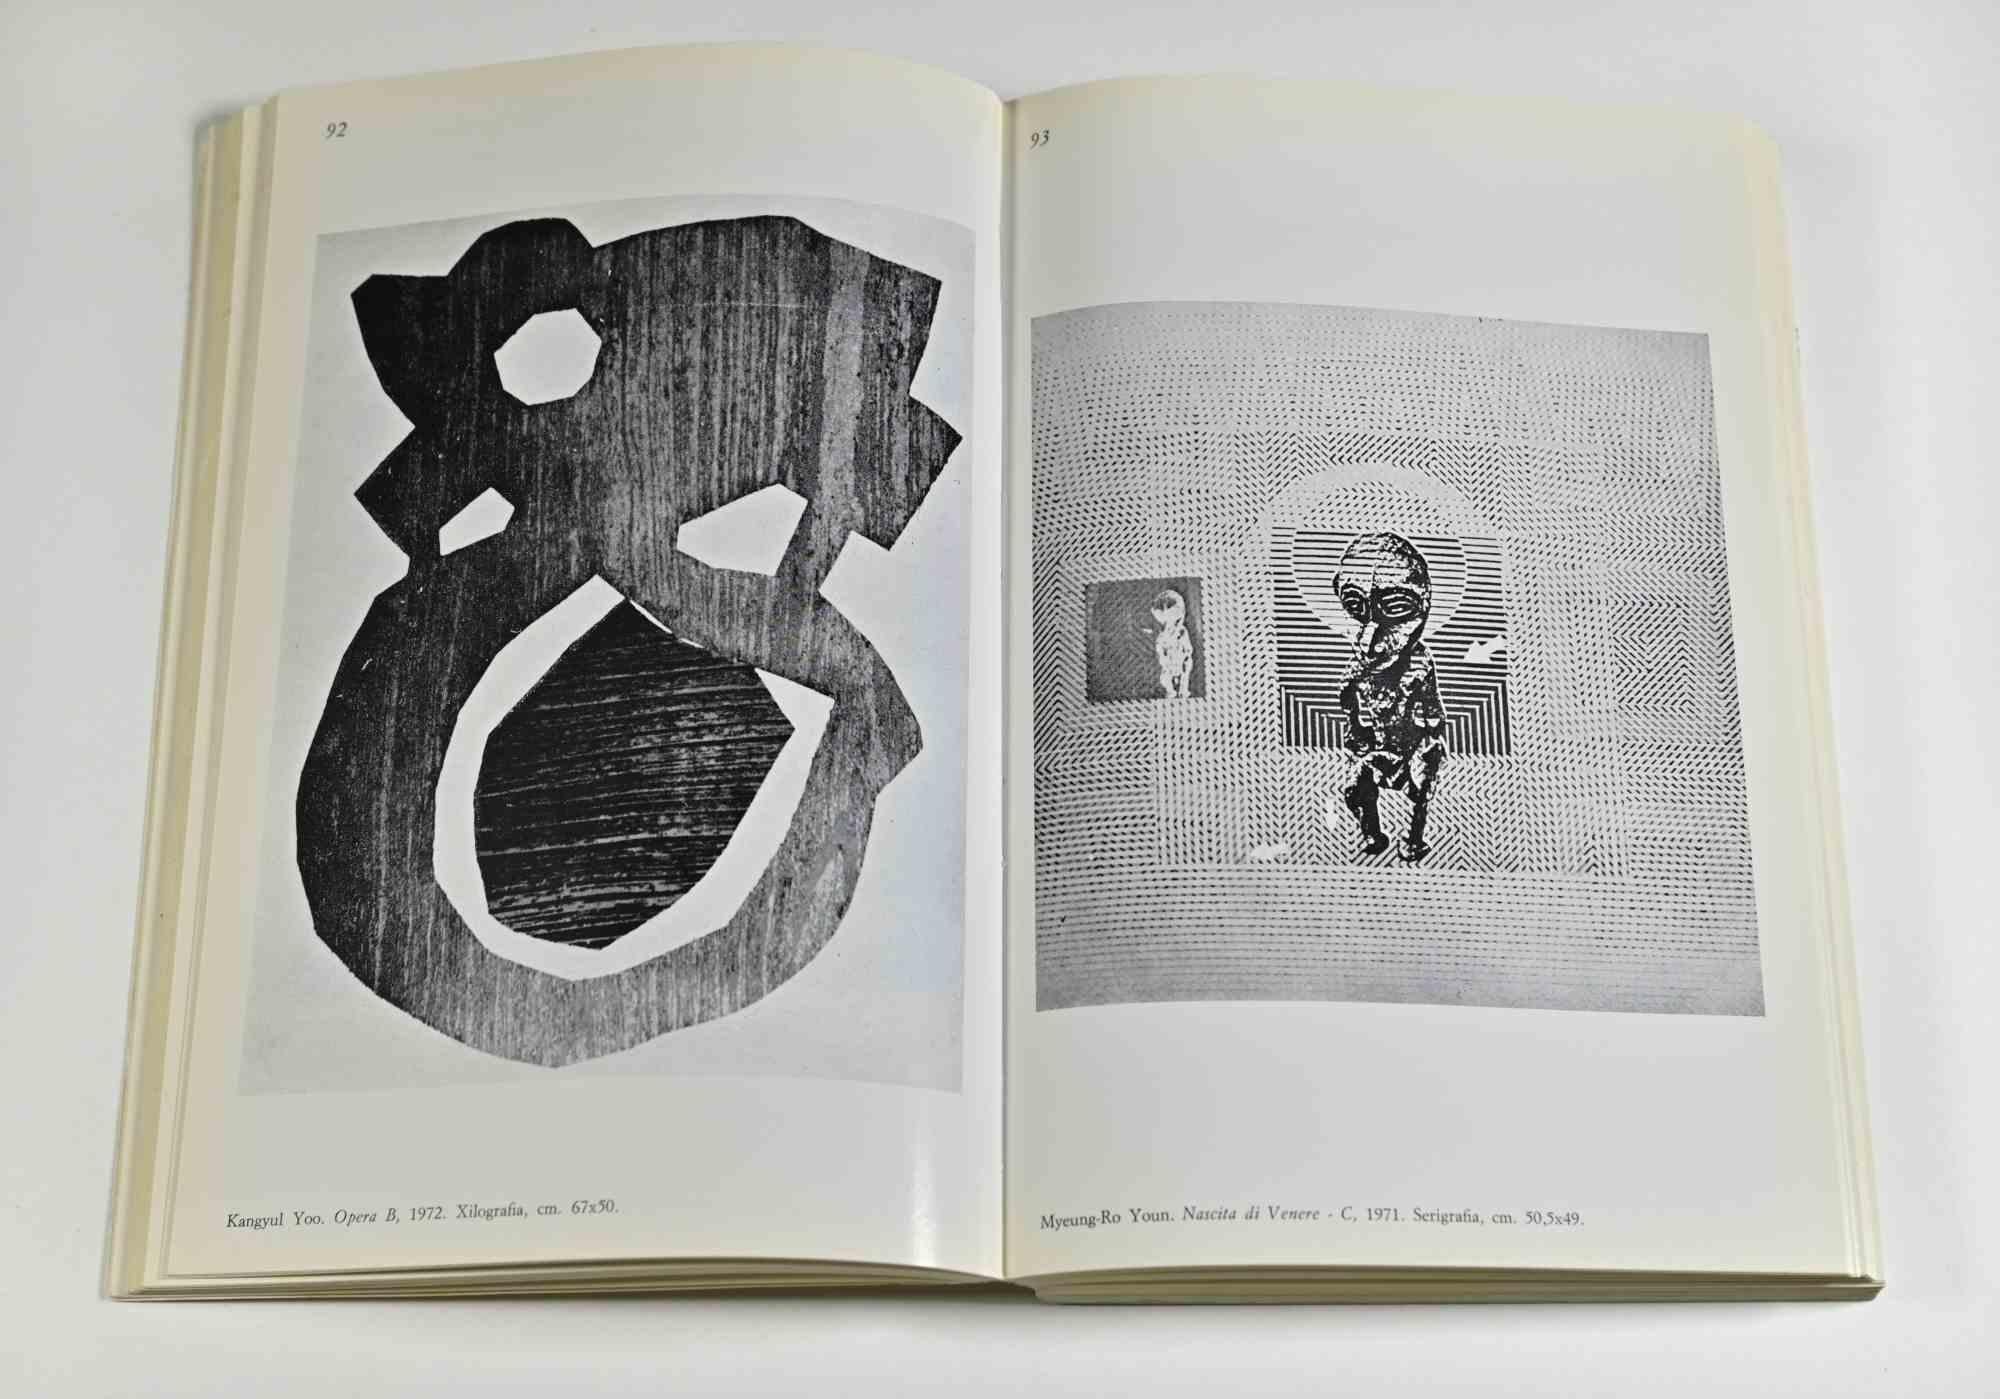 Venice Biennale - International Art Exhibition - Rare Book - 1972 For Sale 2